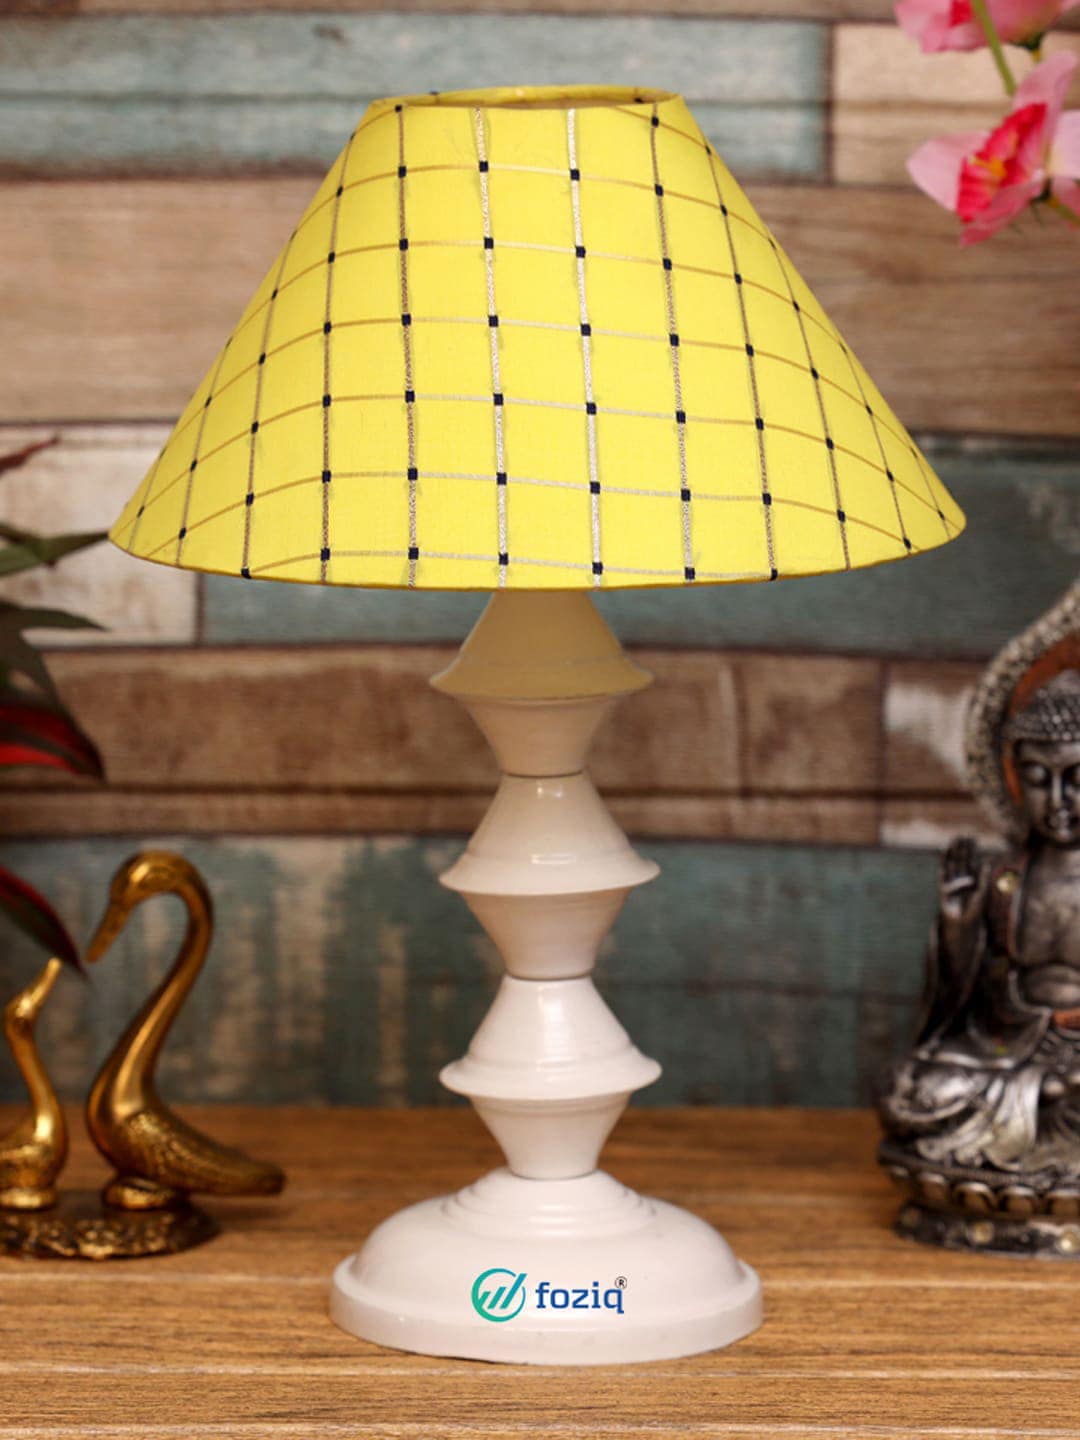 foziq White & Yellow Printed Metal Table Lamp Price in India